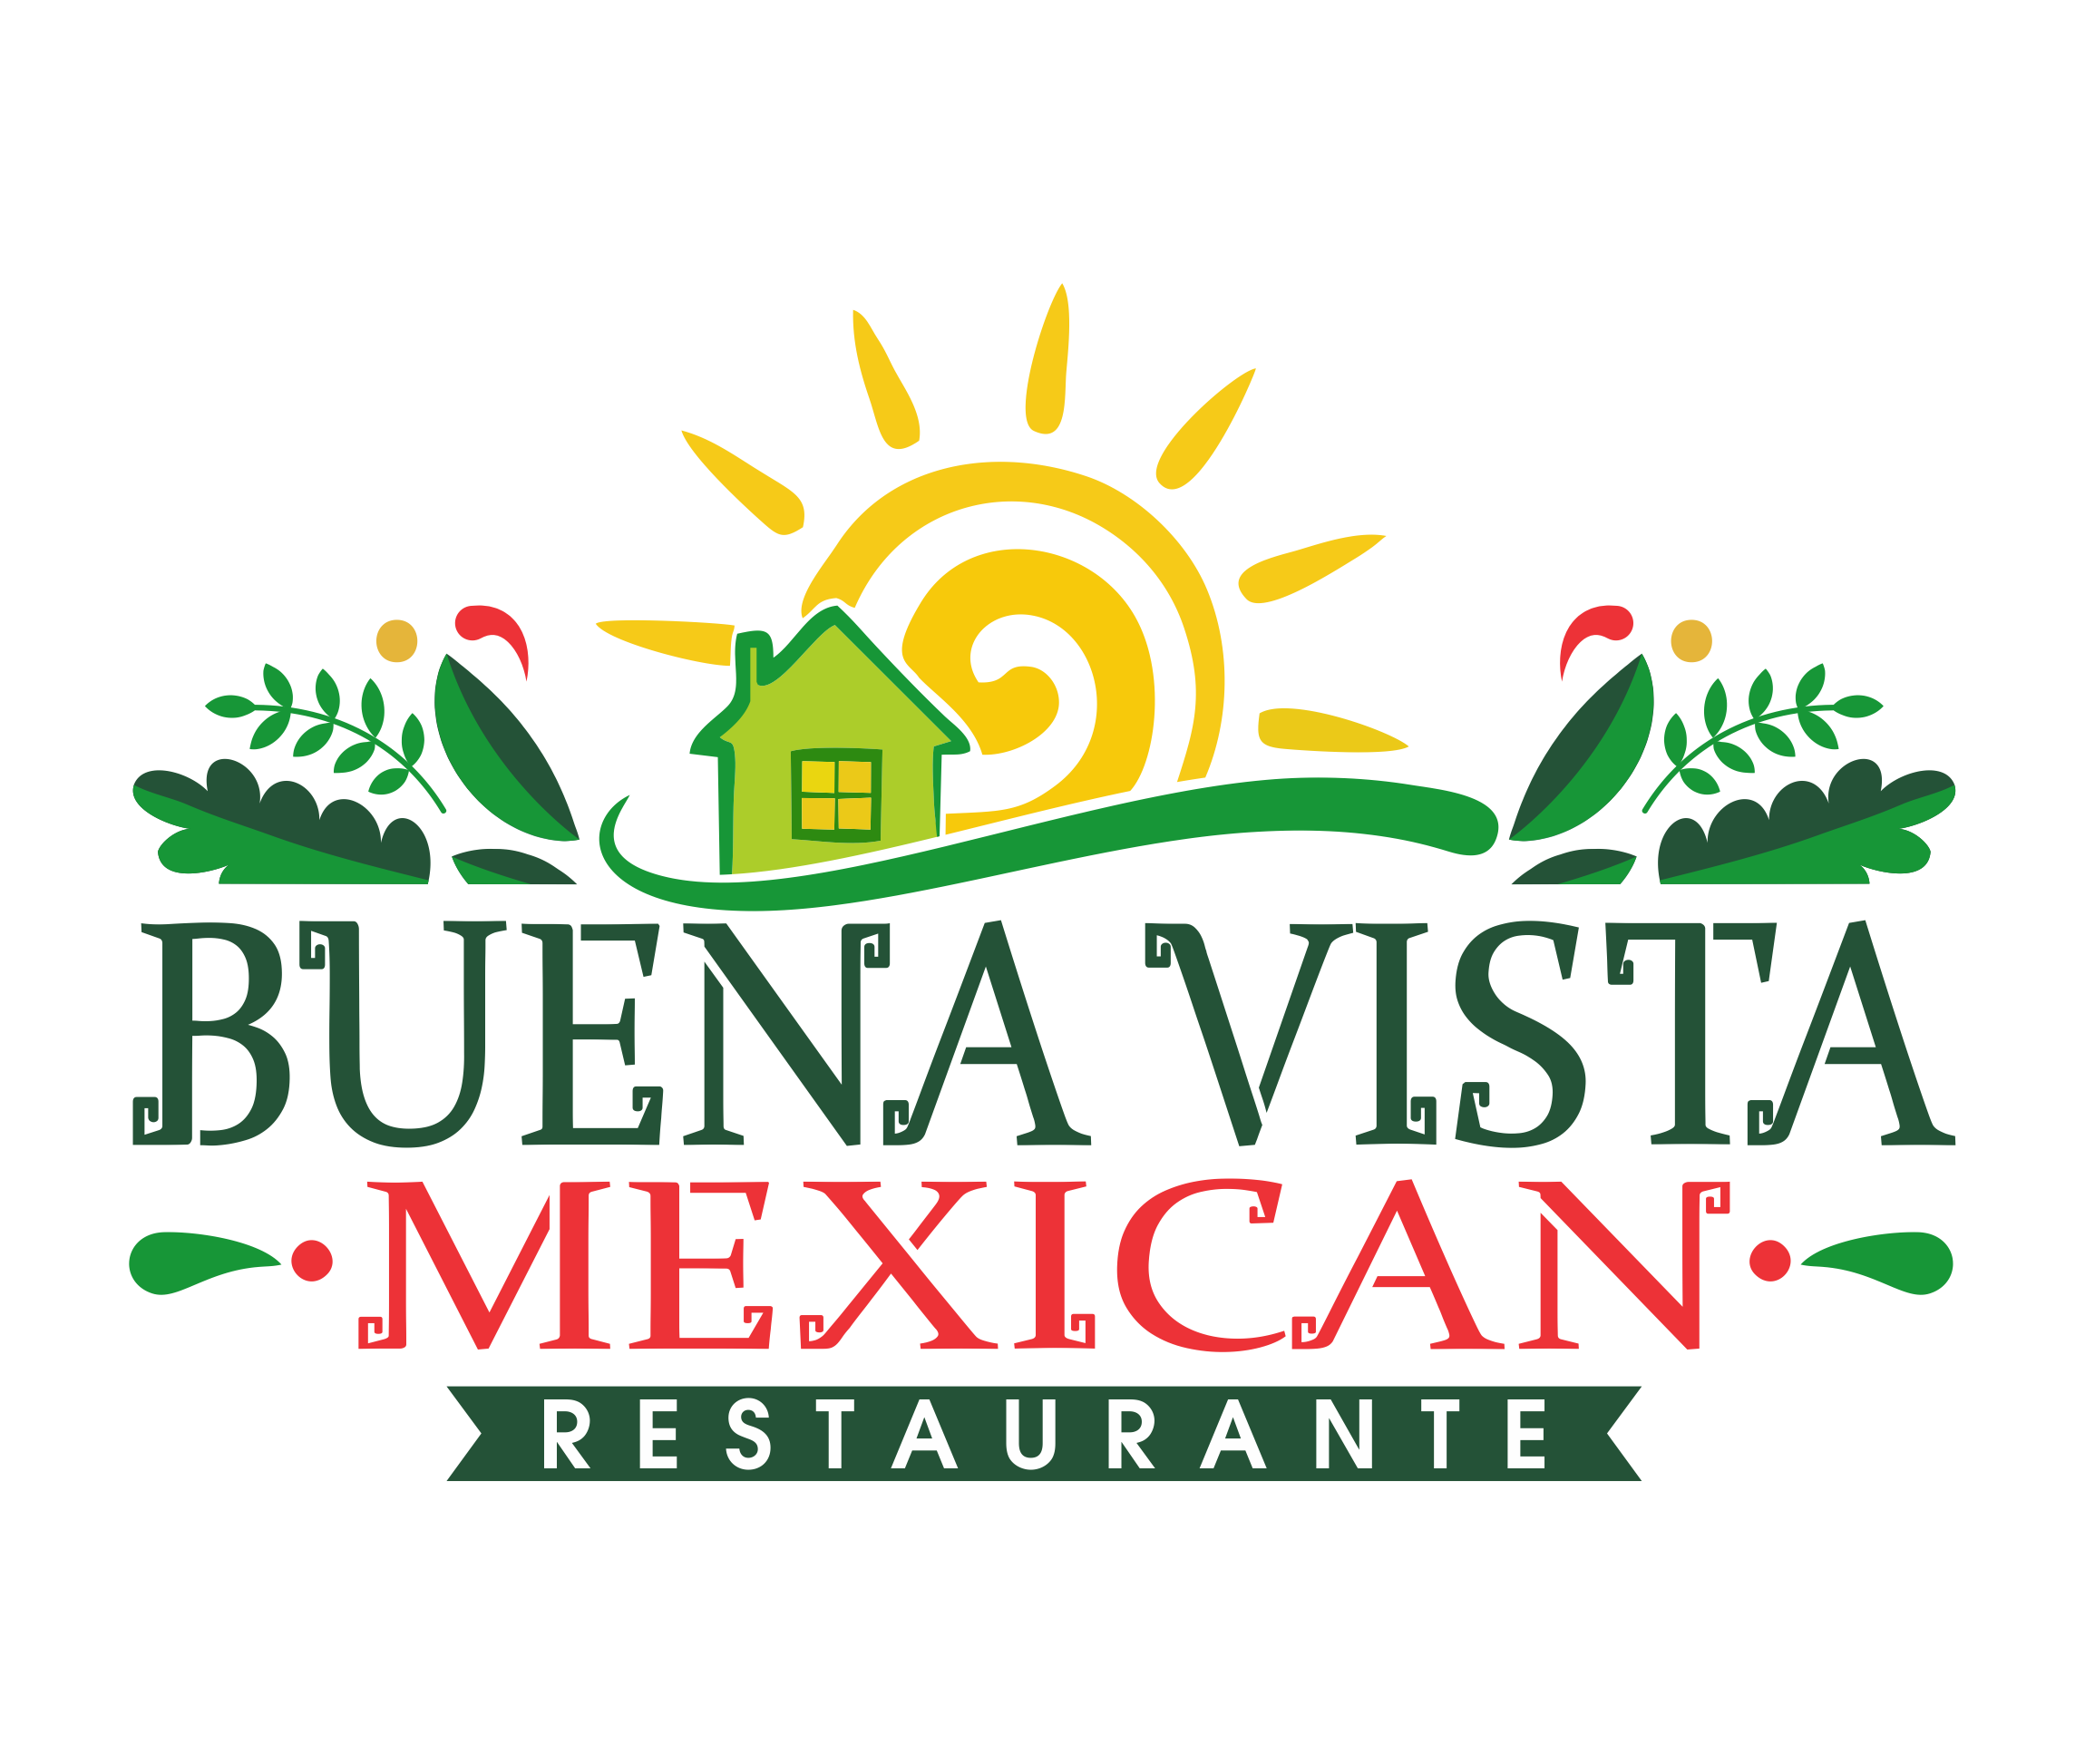 Buena Vista Mexican Restaurant: Wayne 18 West Ave